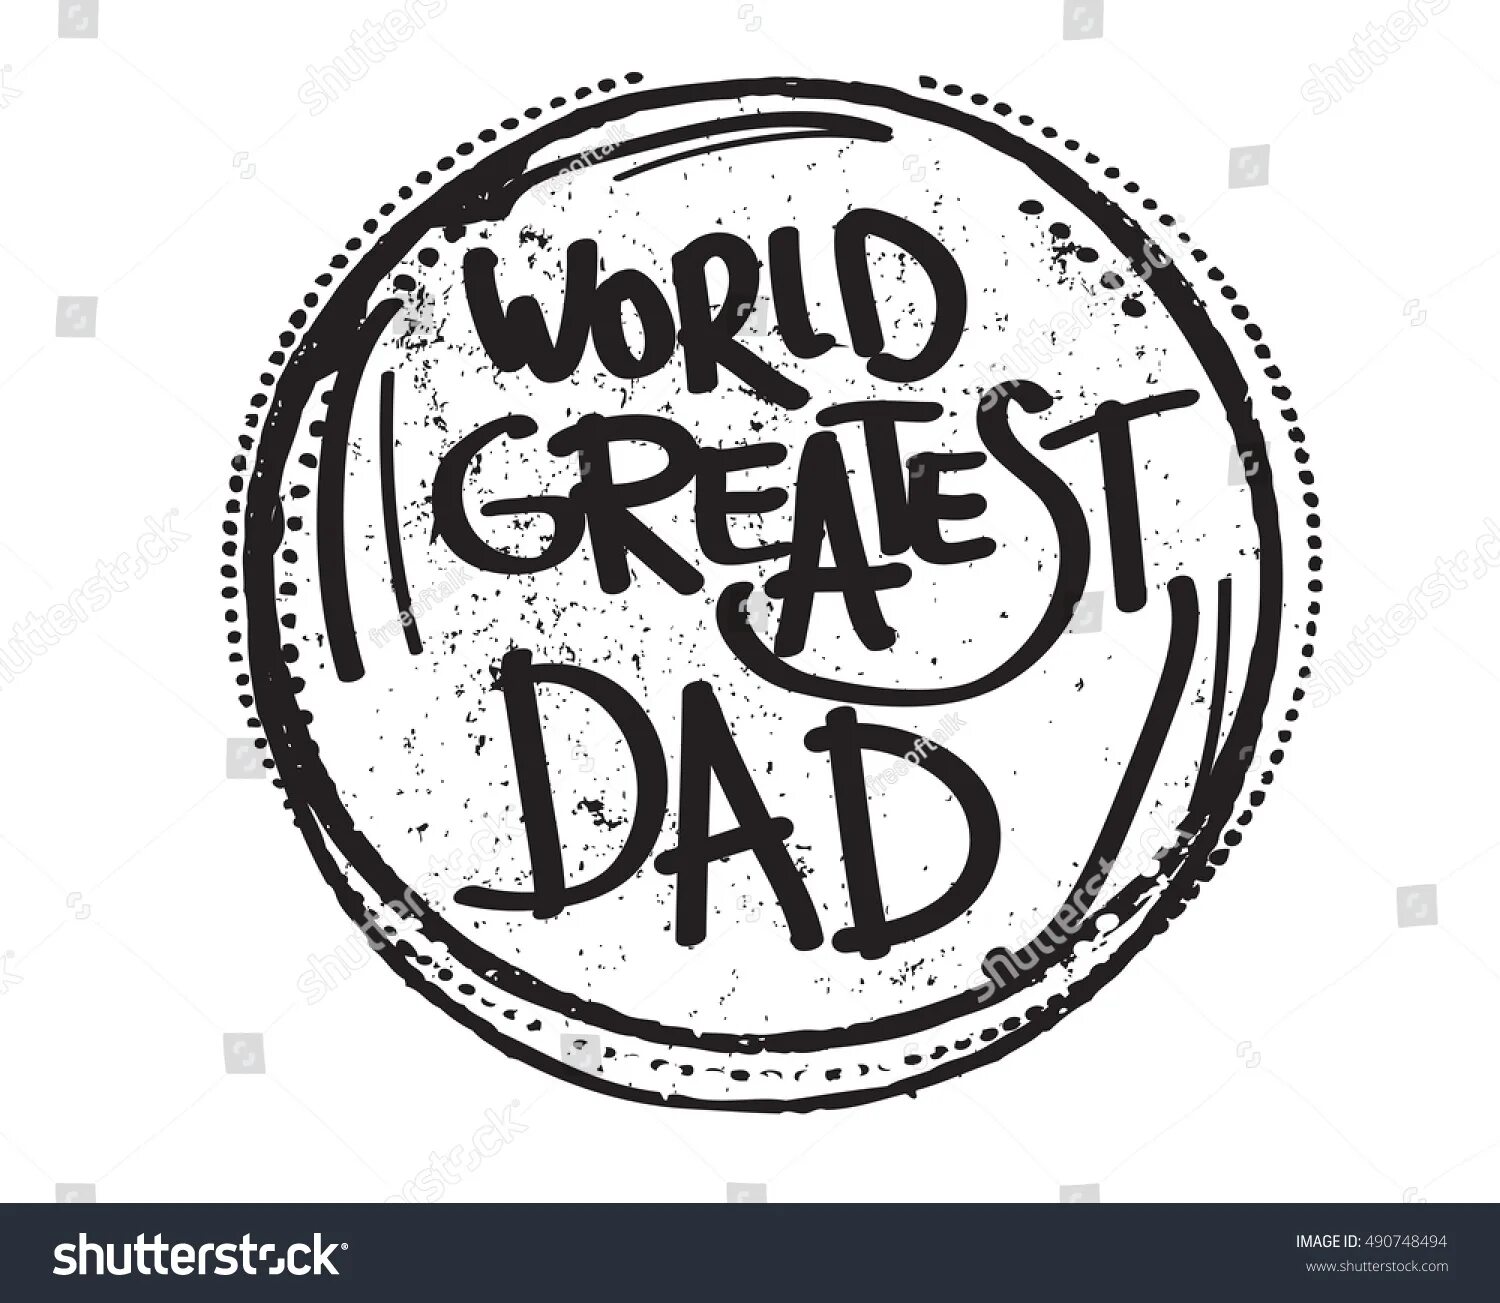 Nick dad. Dad logo. Nick dad logo on. Hells Greatest dad text.